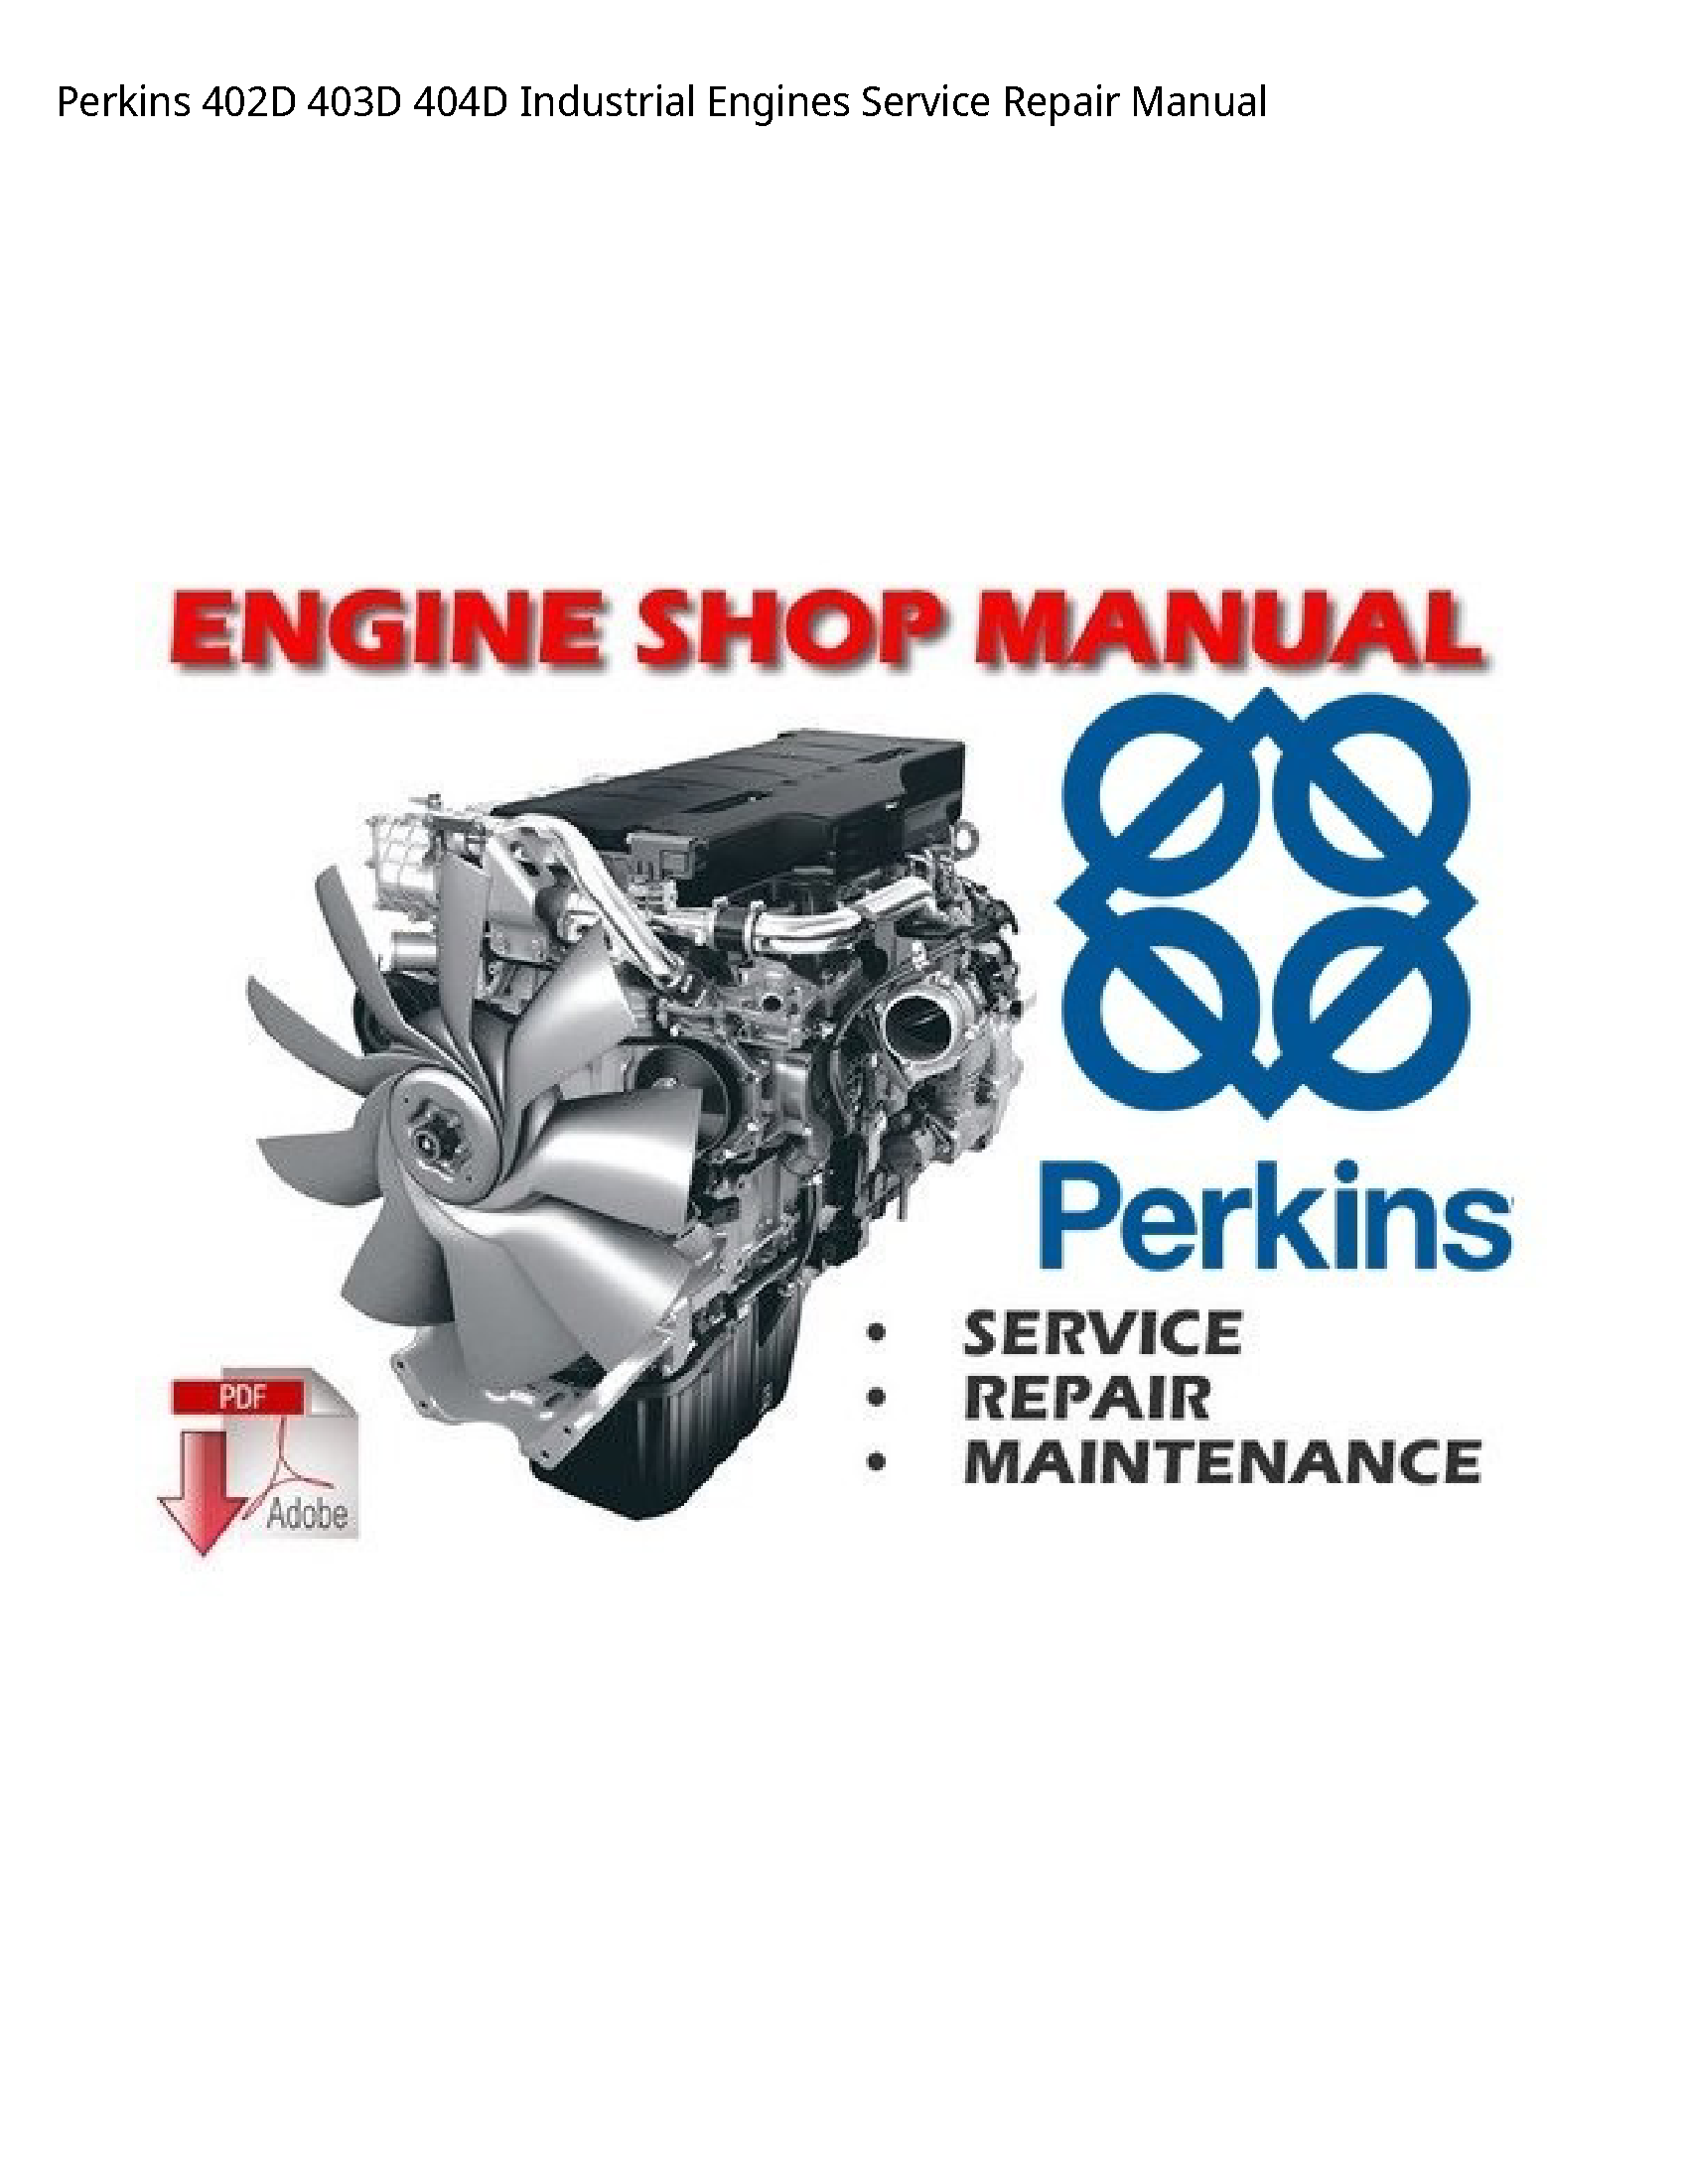 Perkins 402D Industrial Engines manual